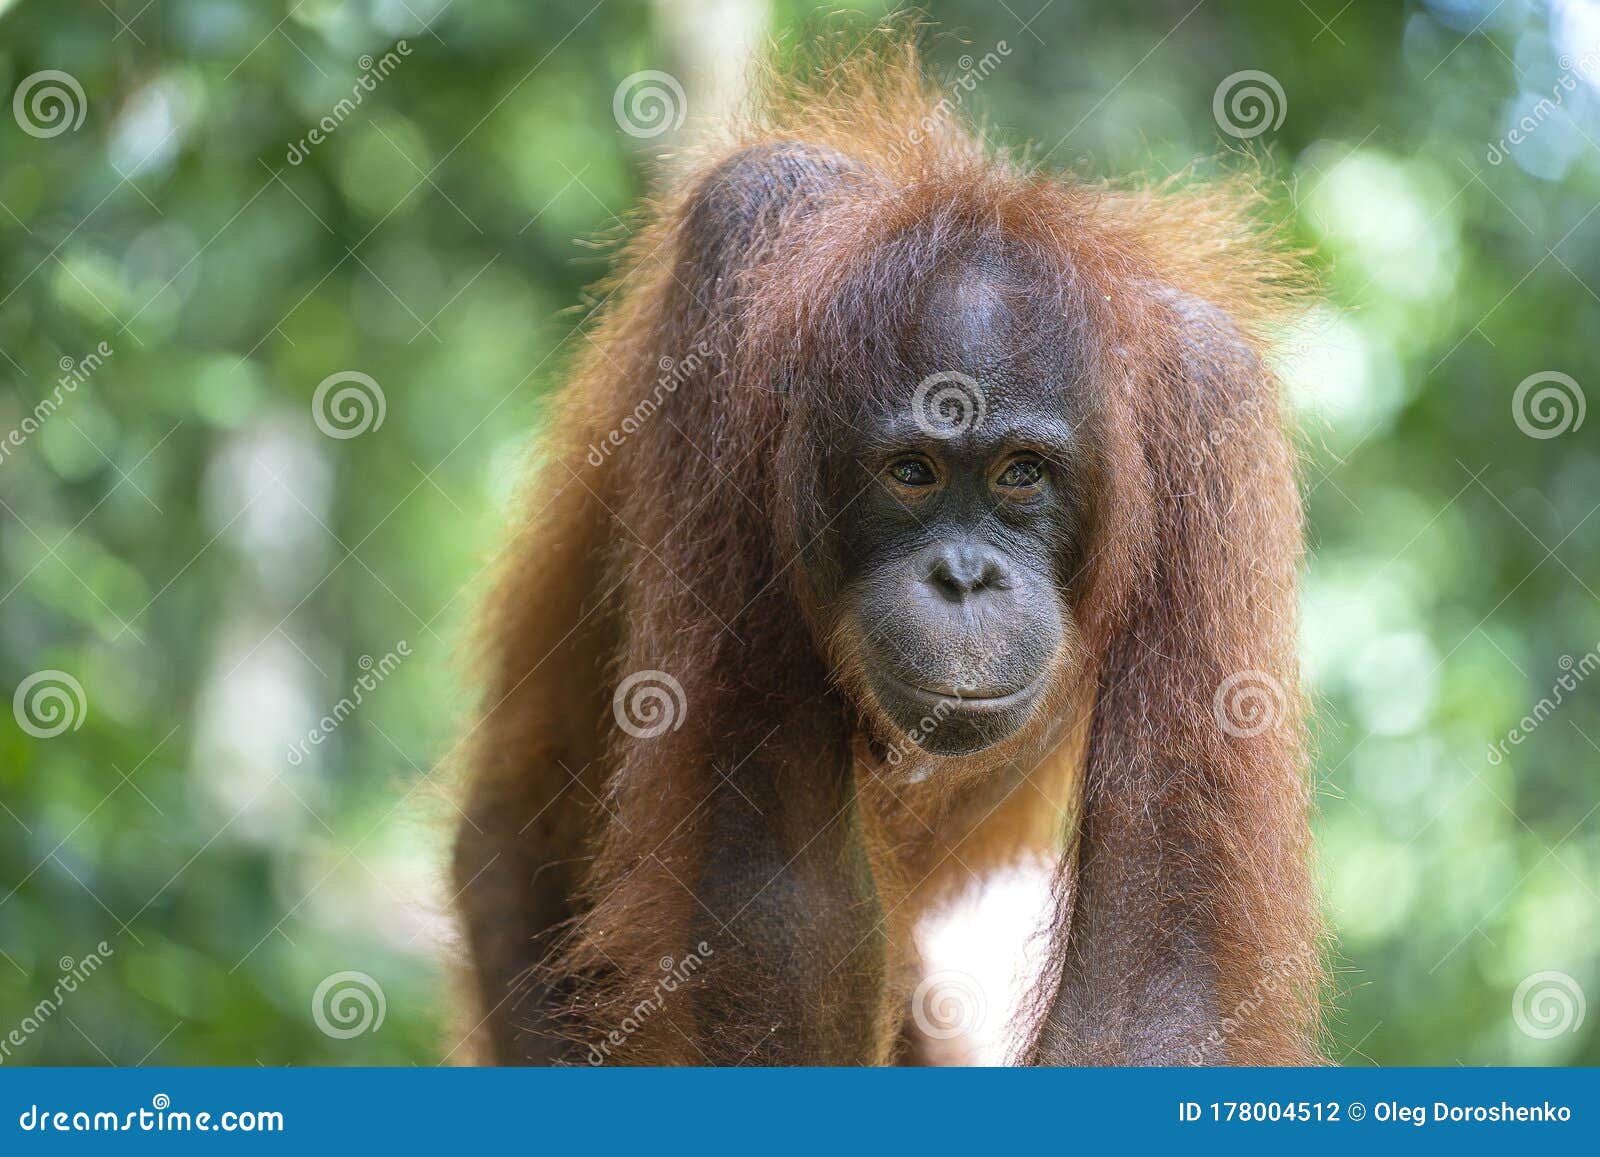  Wild Orangutan  In Rainforest Of Borneo Malaysia 